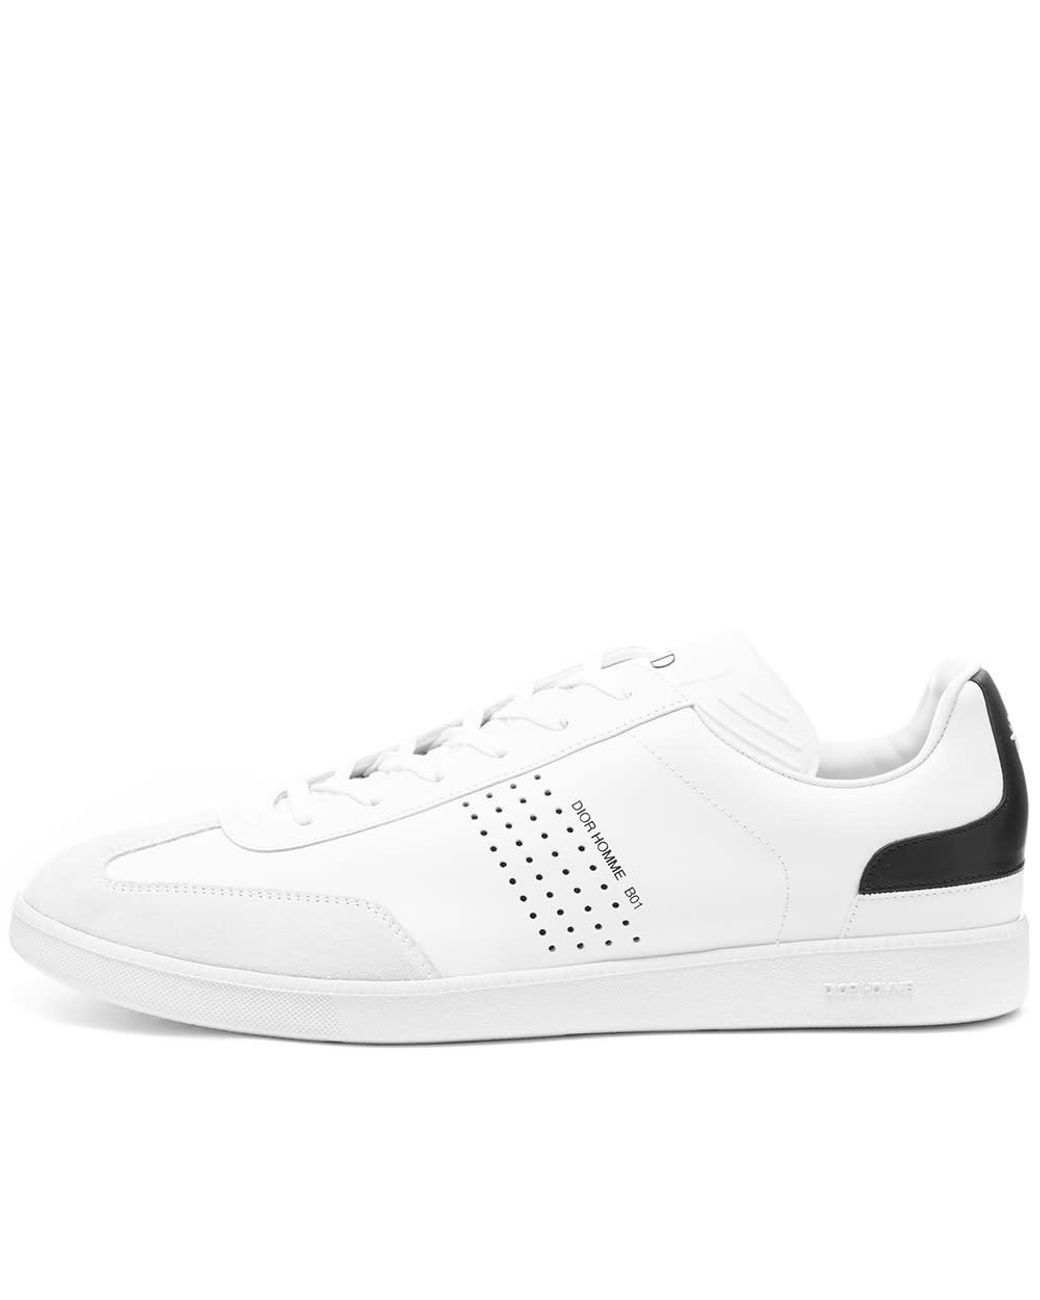 Dior Homme B01 Sneaker in White for Men  Lyst